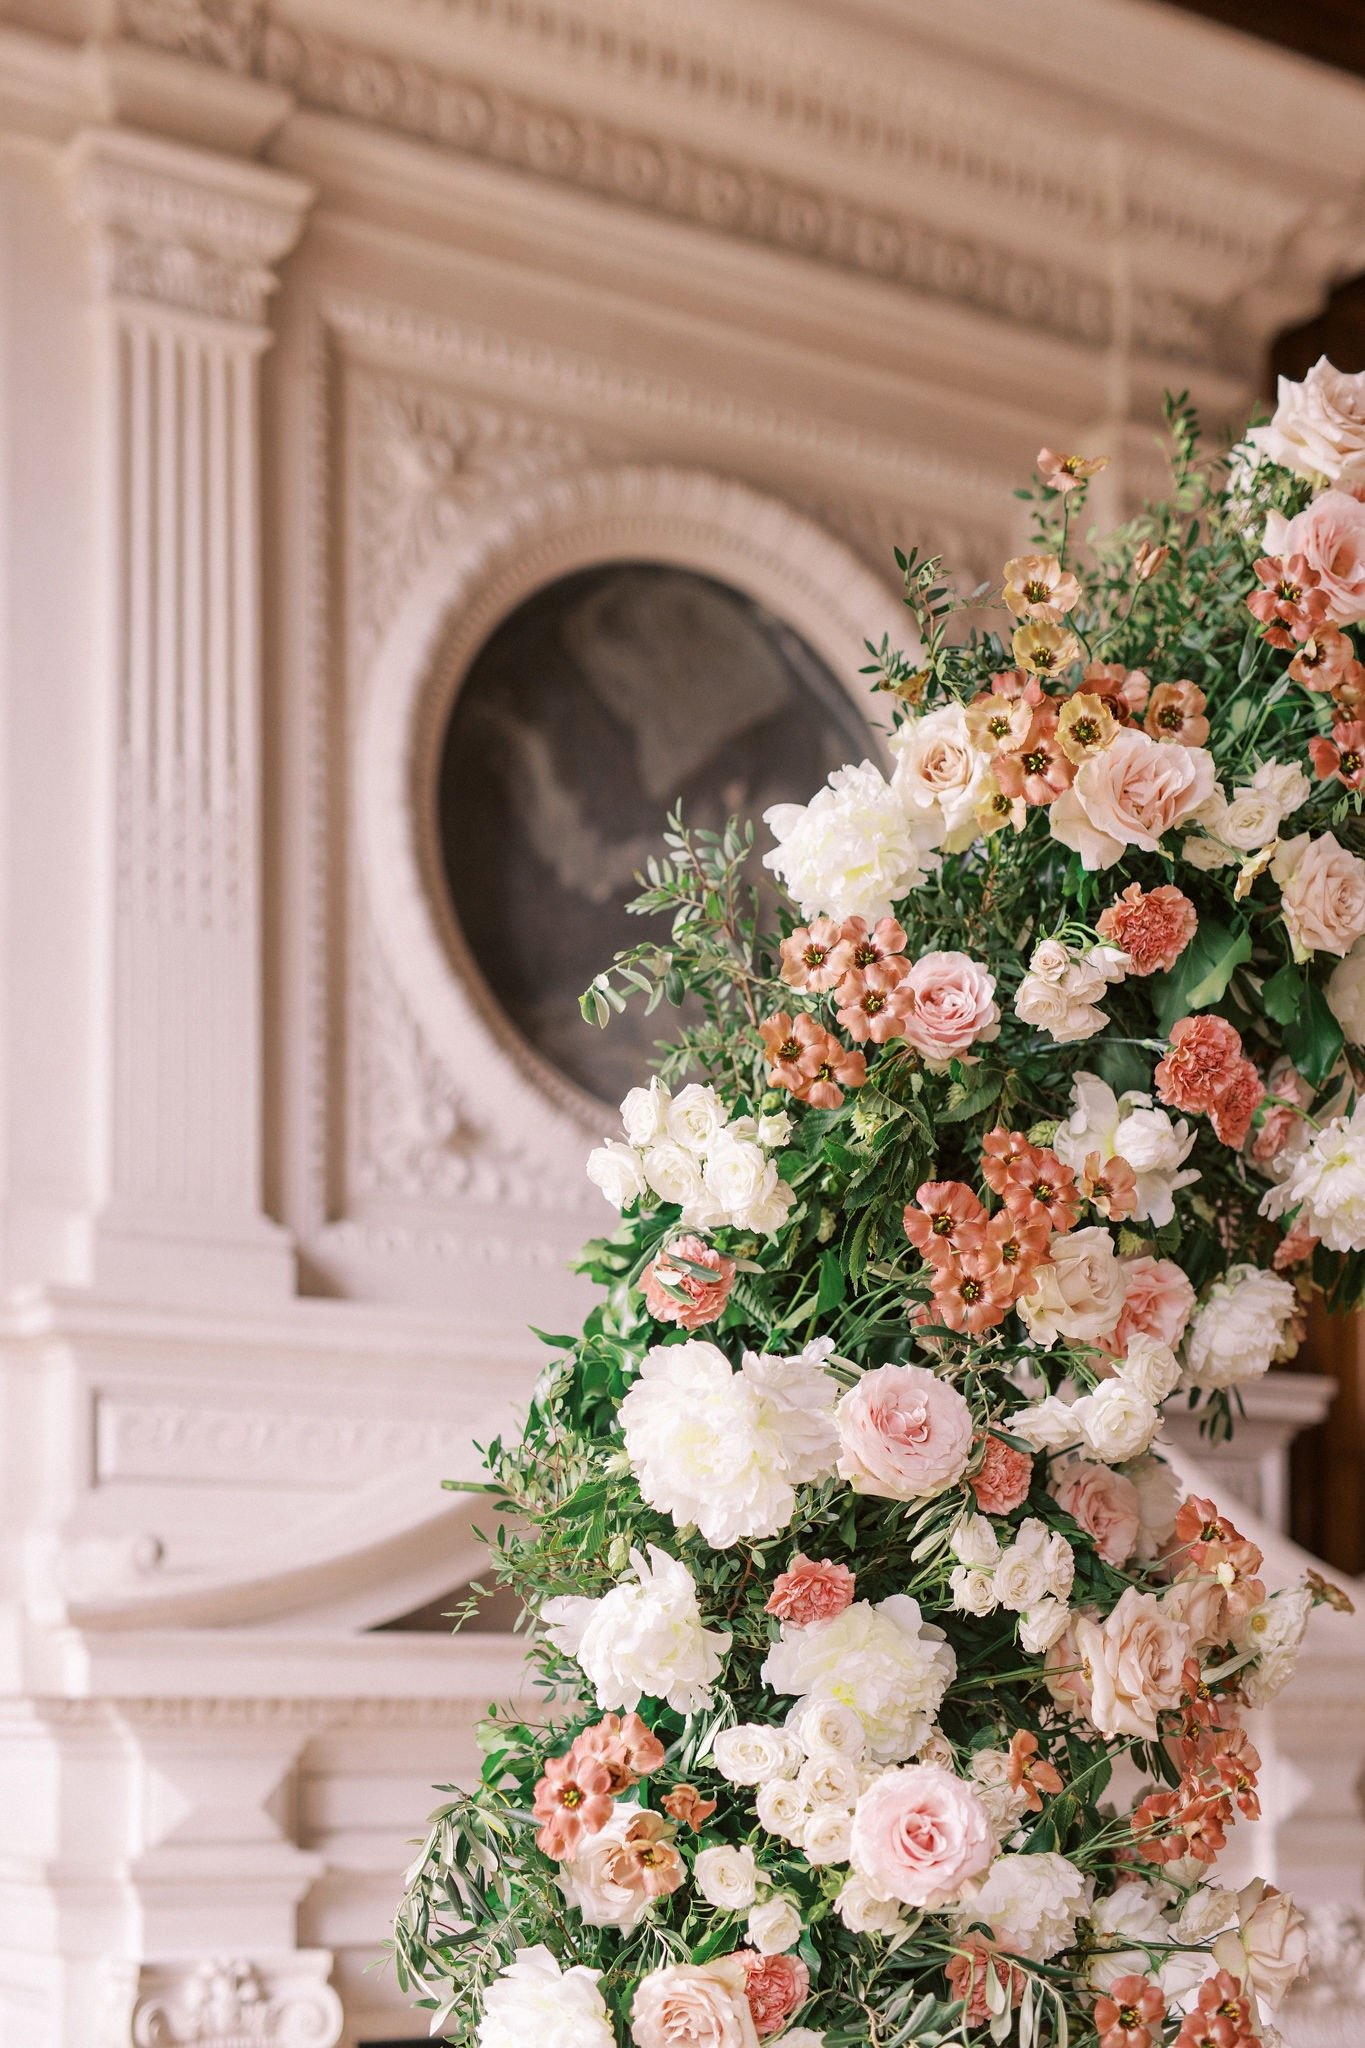 Floresie_luxury_wedding_florist_france_Lyon - 11.jpeg